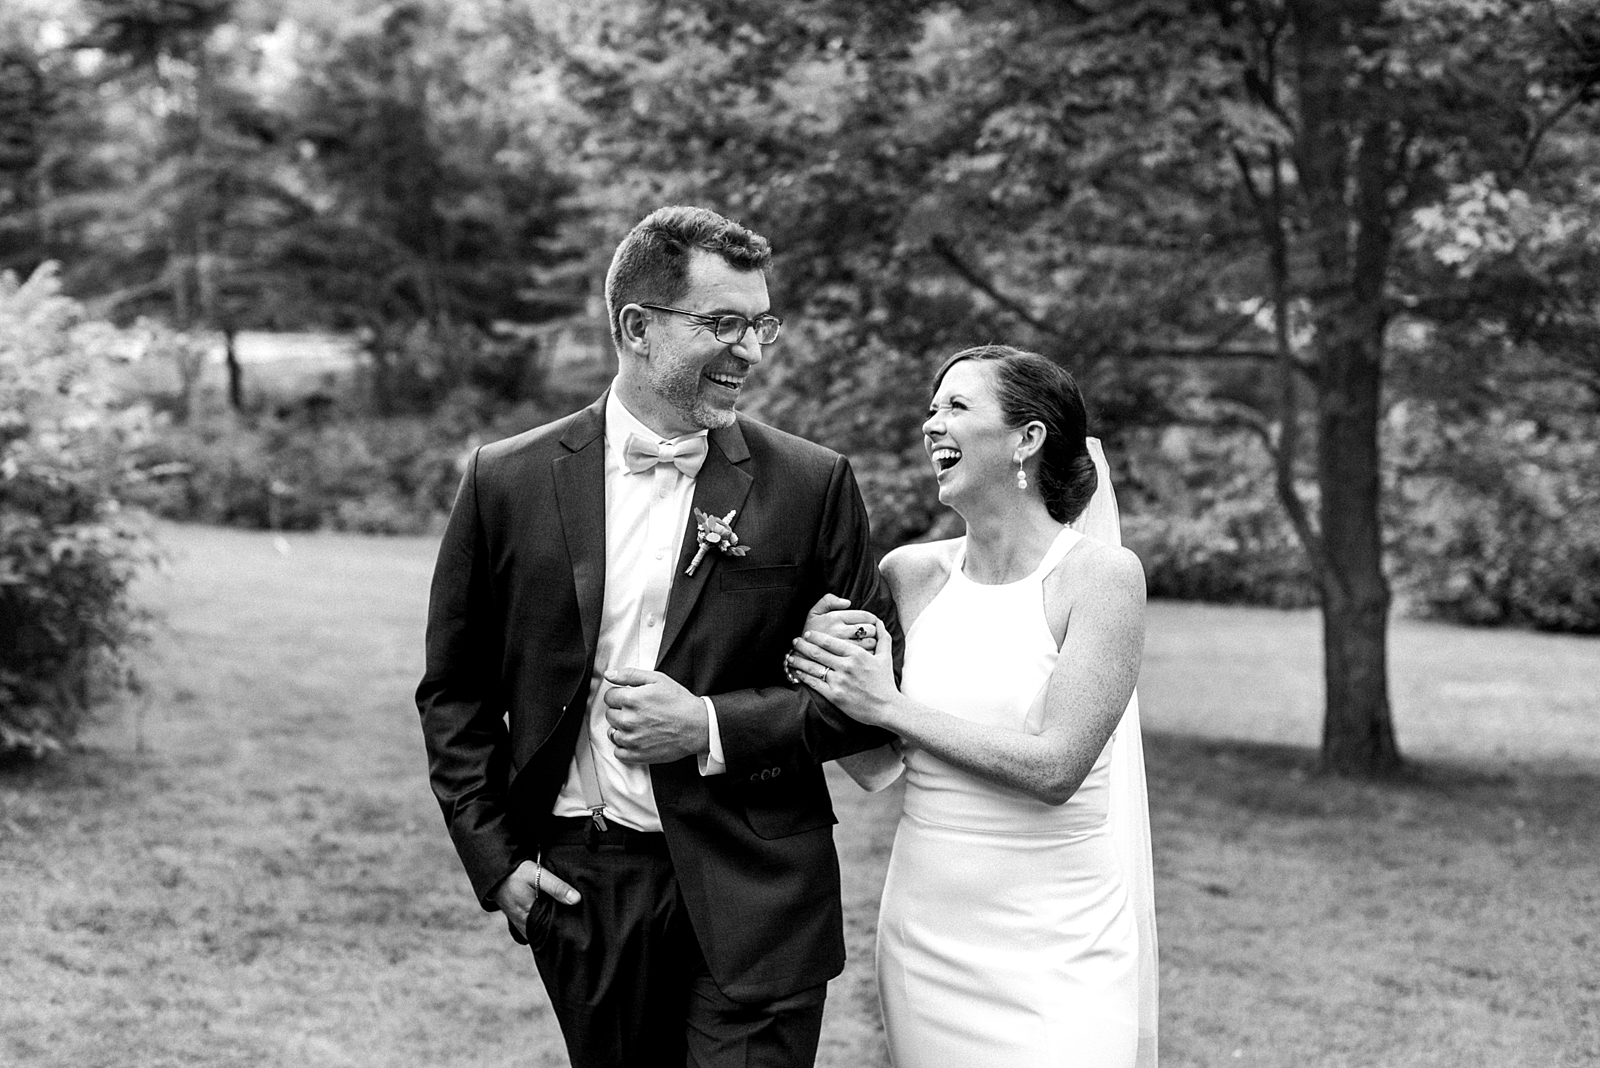 Intimate Backyard Micro Wedding by Boston Wedding Photographer Annmarie Swift